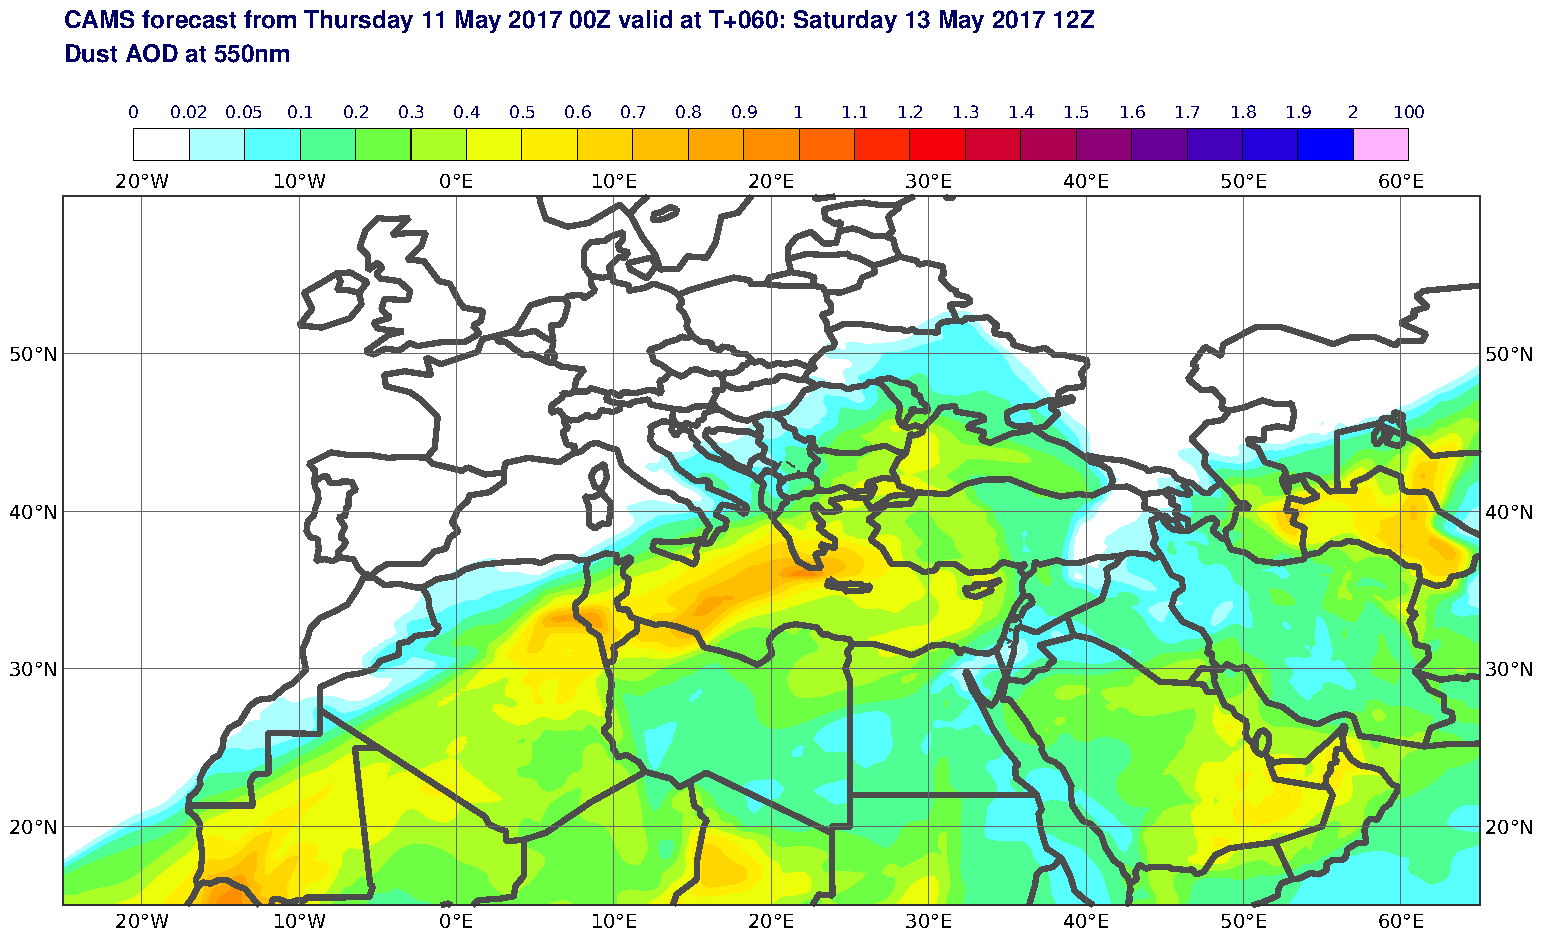 Dust AOD at 550nm valid at T60 - 2017-05-13 12:00